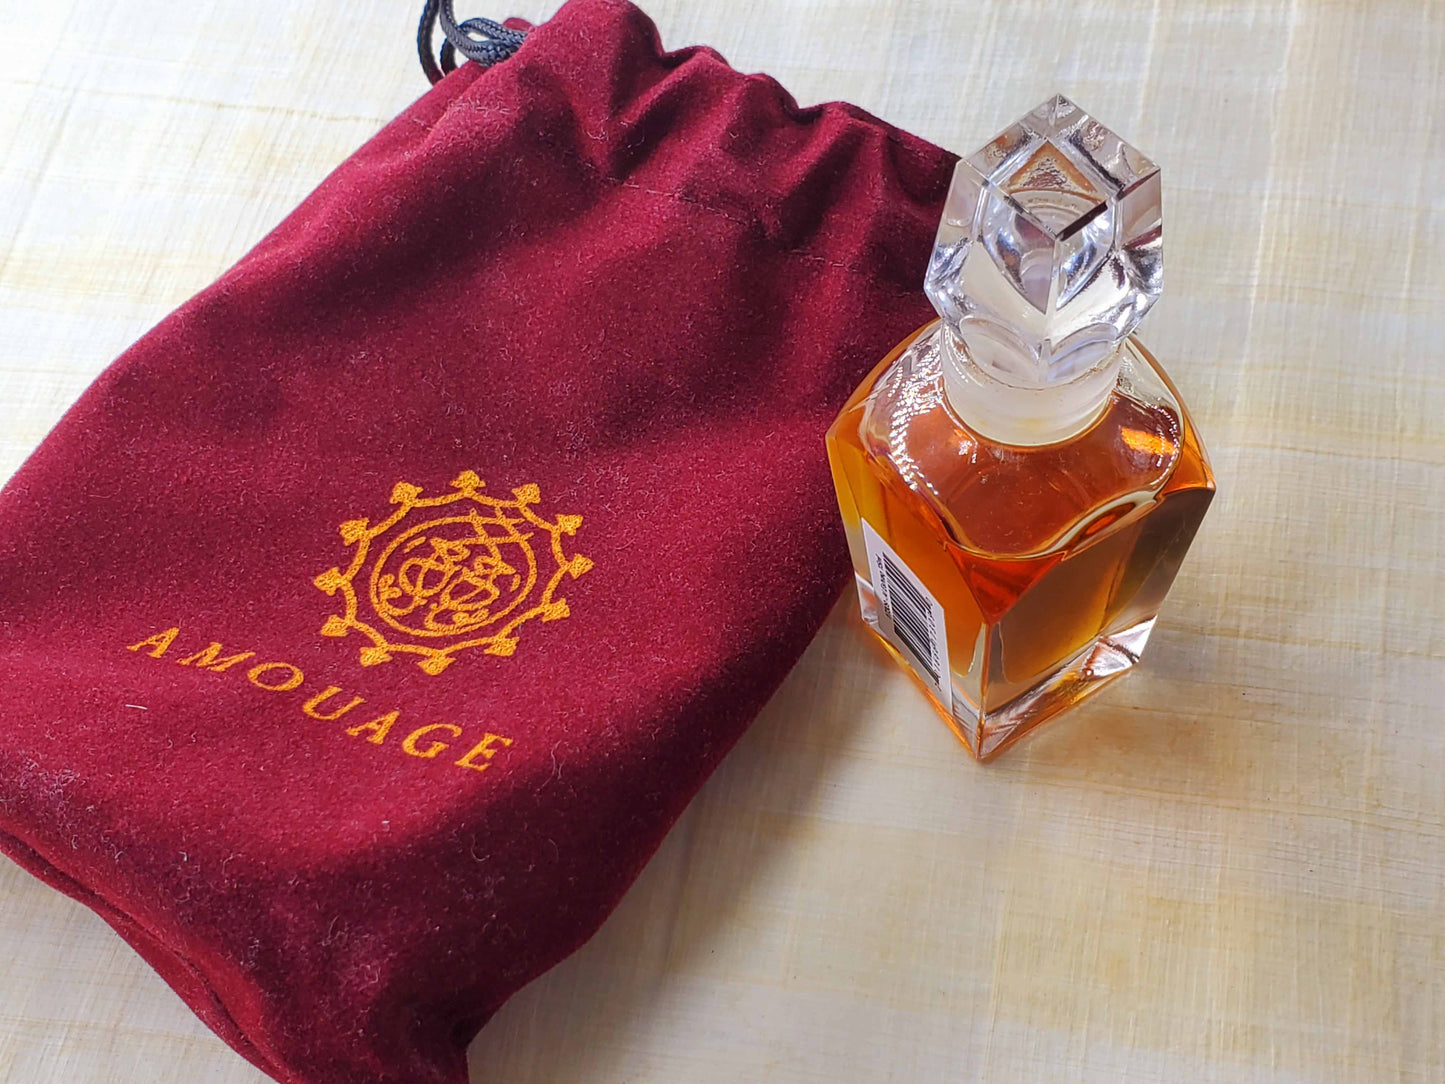 Amouage Al Eshraq Attar The Gift Of Kings Oil Parfum 15 ml 0.5 oz, Rare, Vintage